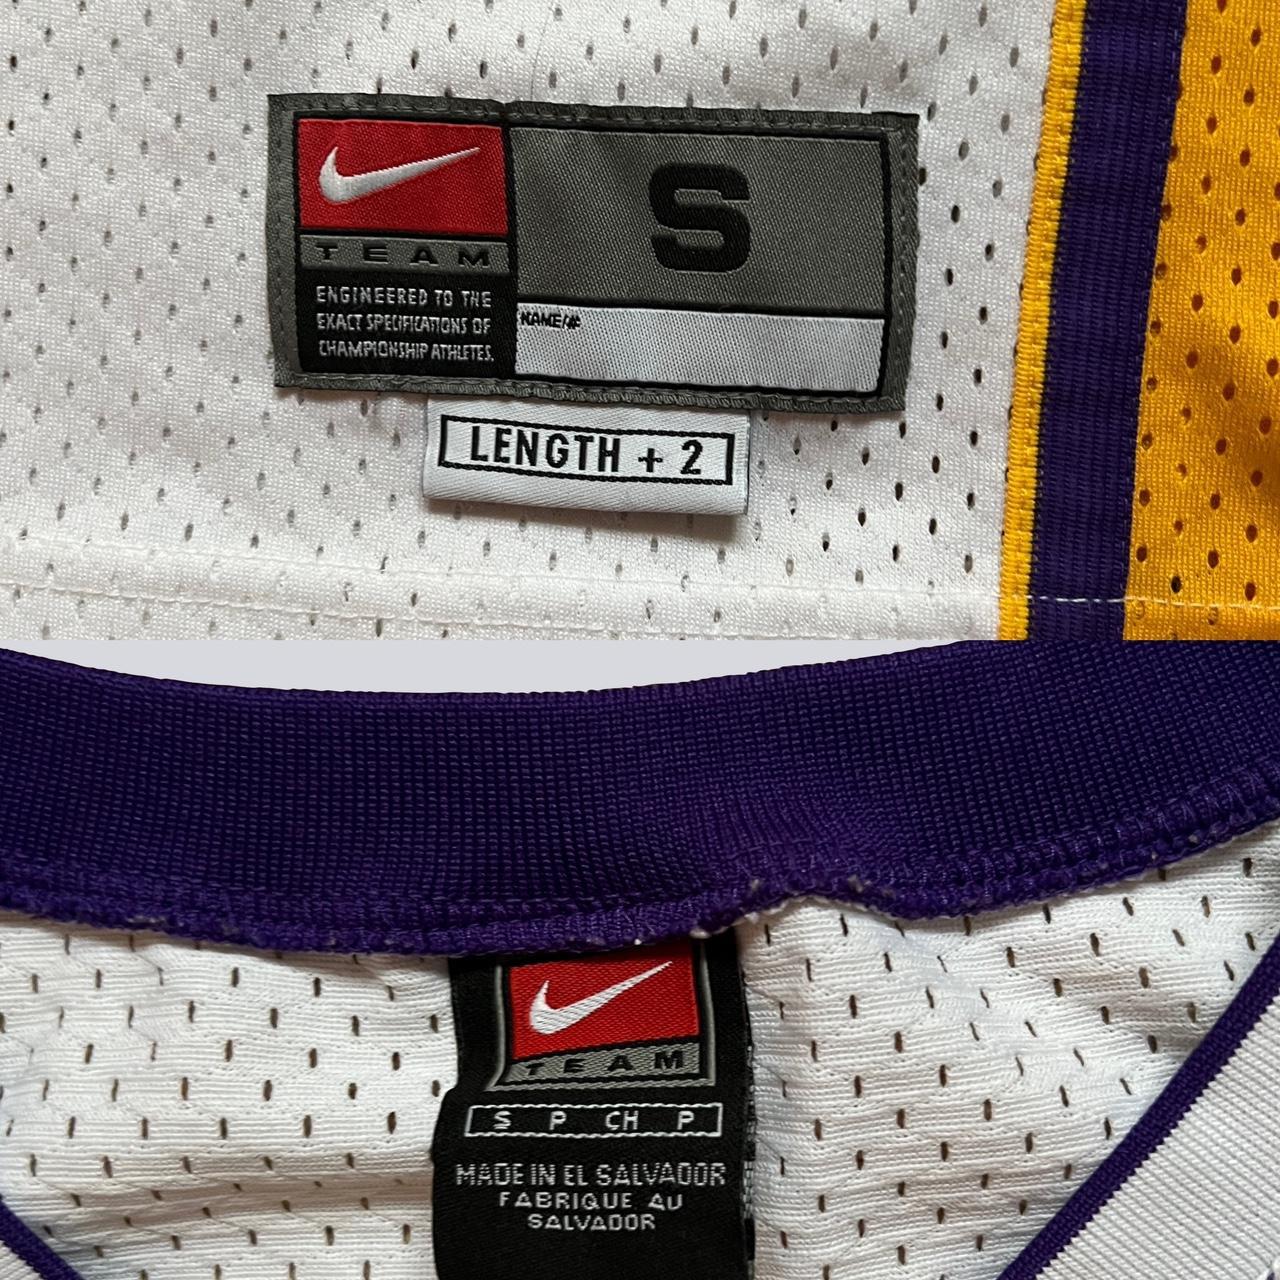 ▪️LA Lakers Jersey ▪️Men's White and Yellow Vintage - Depop